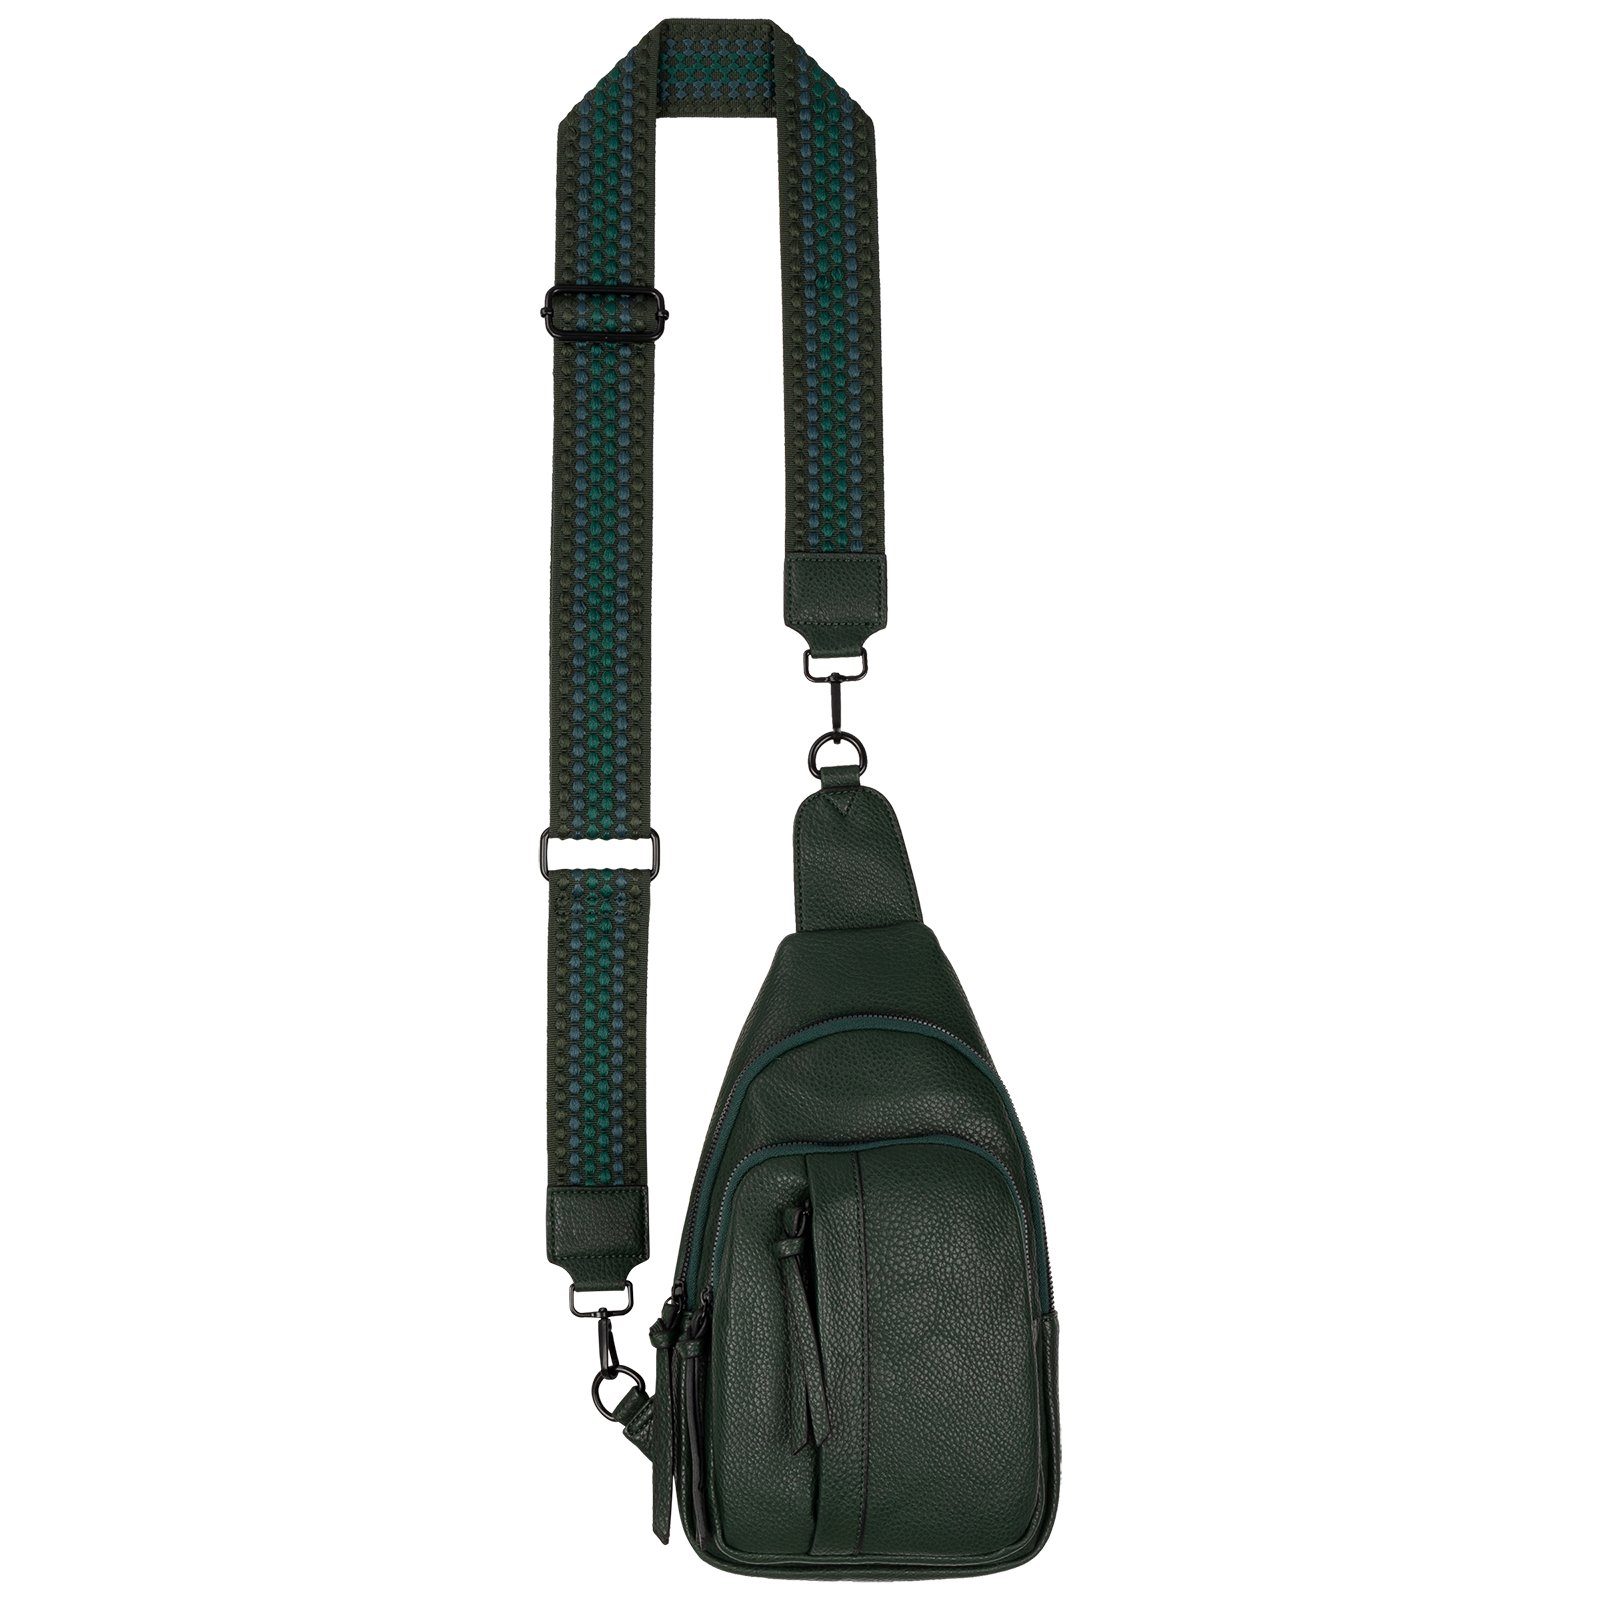 EAAKIE Umhängetasche Brusttasche Umhängetasche Schultertasche Cross Body Bag Kunstleder, als Schultertasche, CrossOver, Umhängetasche tragbar DARK-GREEN